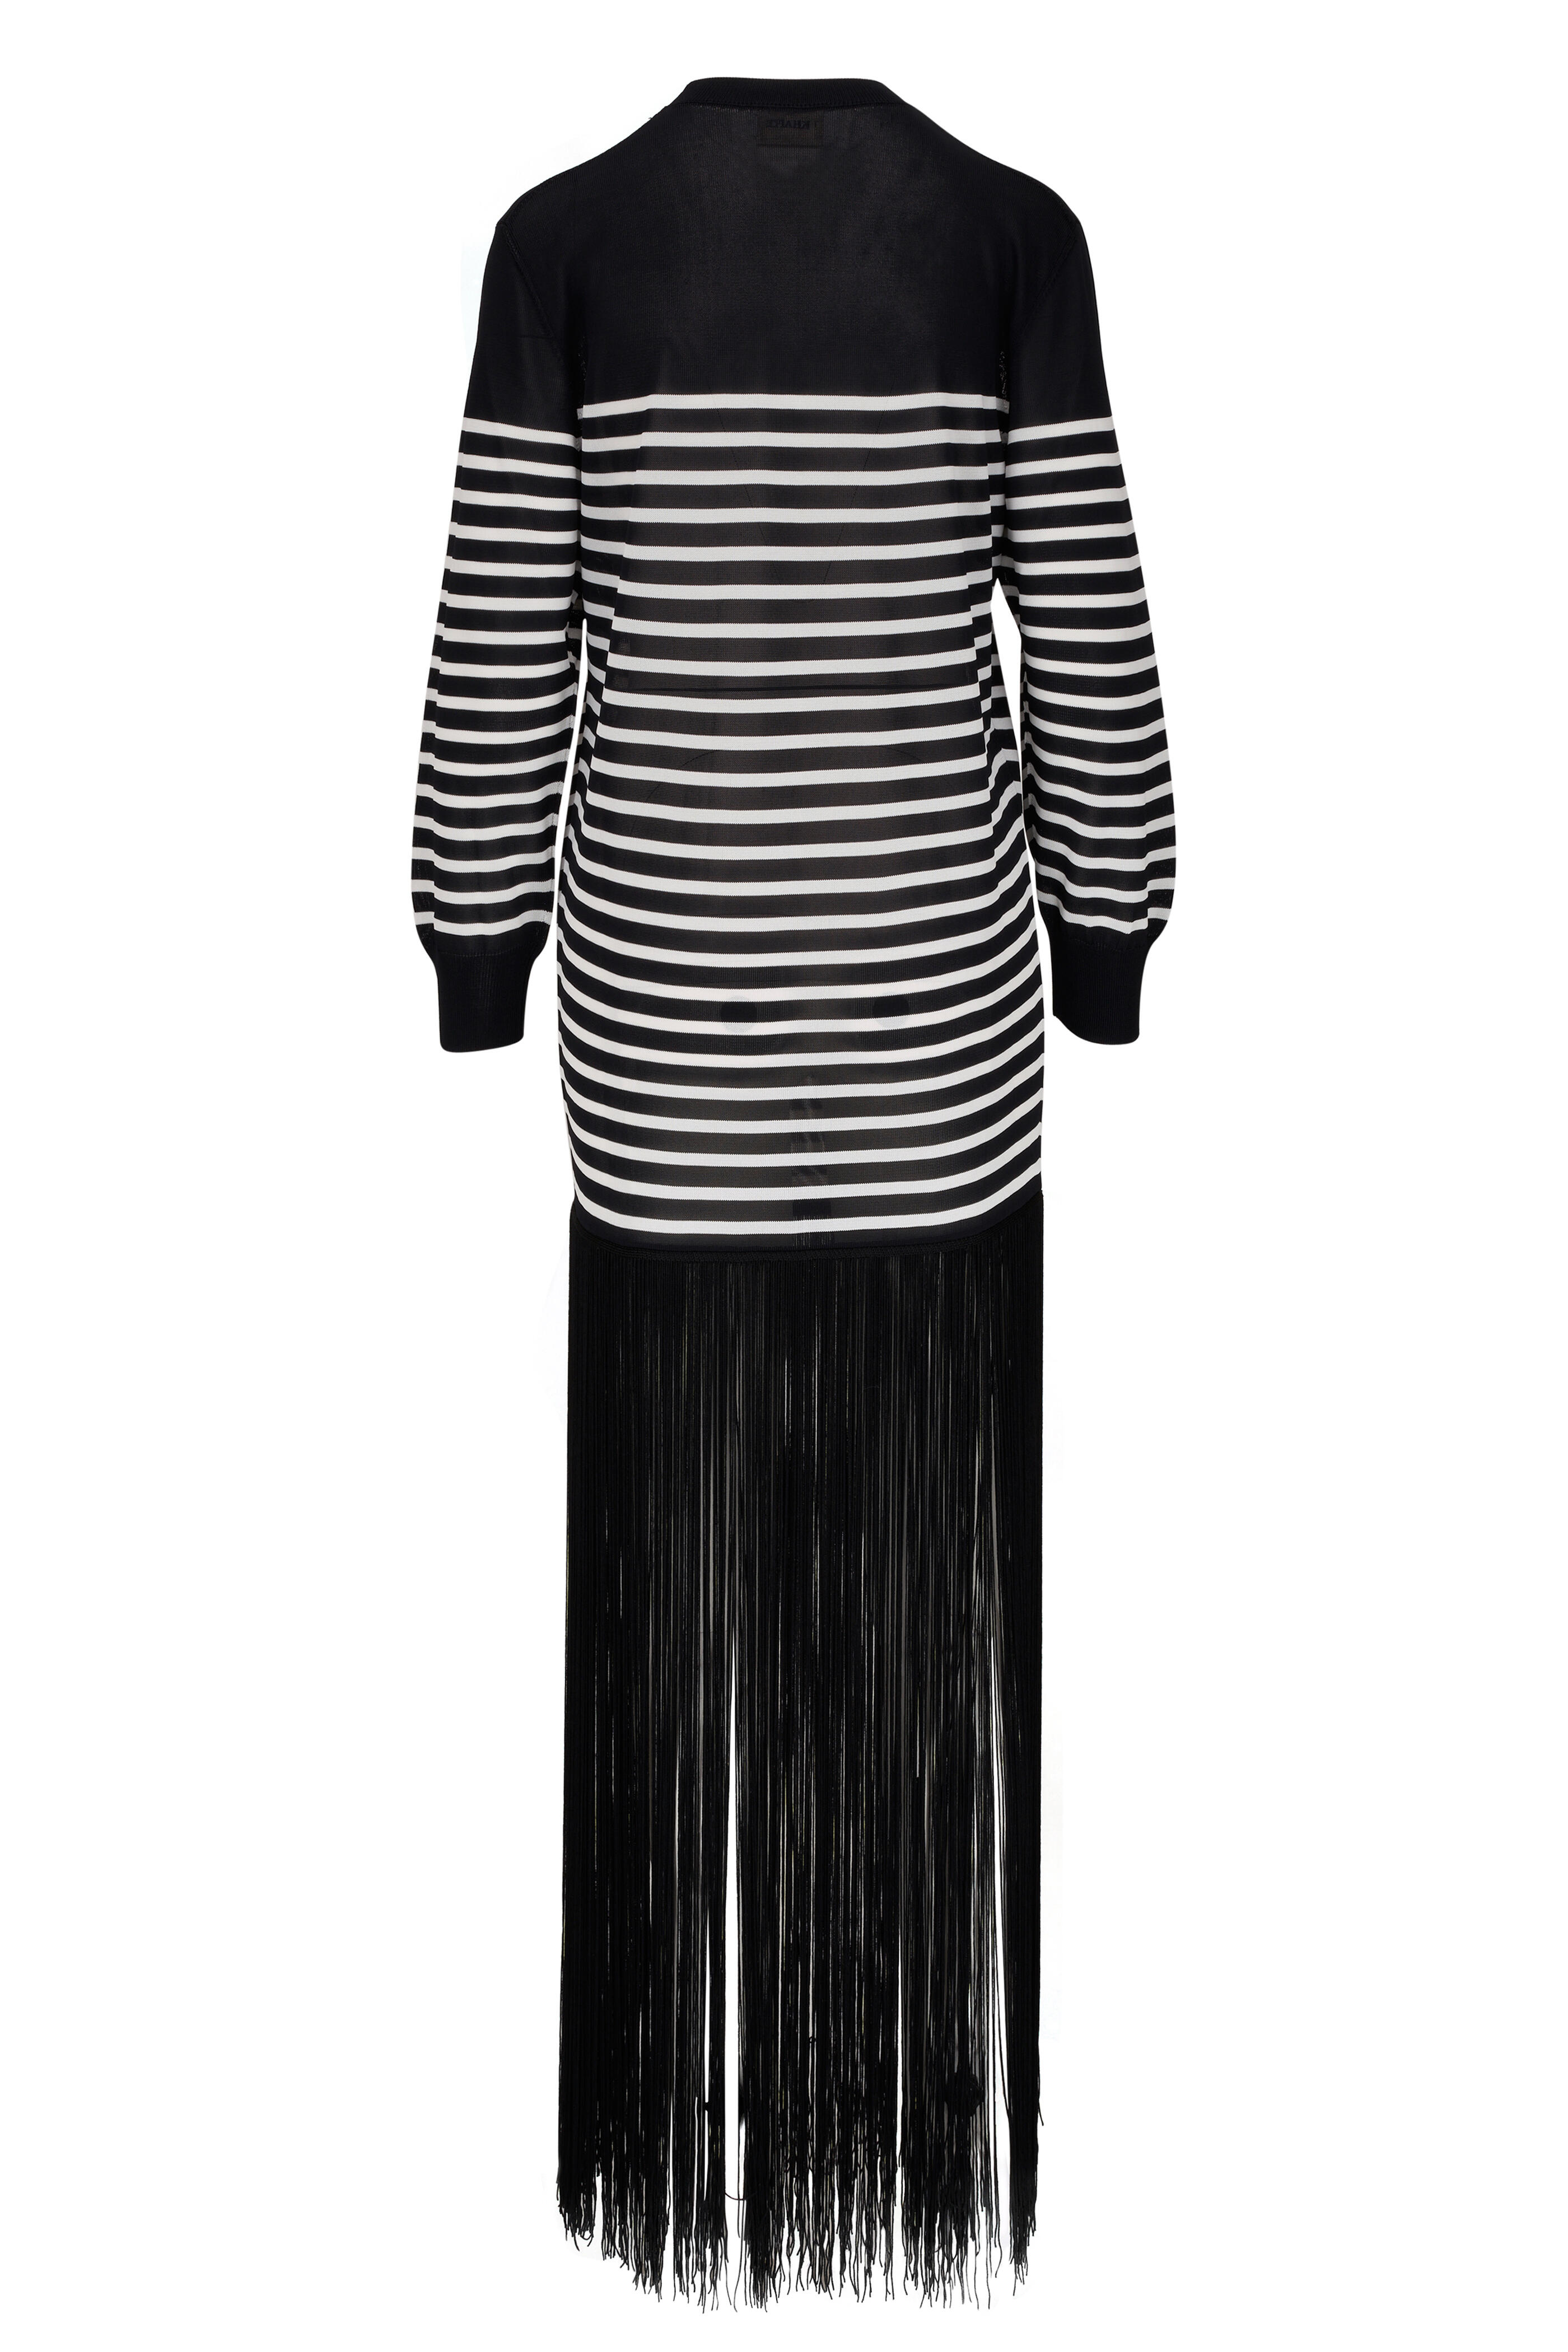 Khaite - Torino Ivory & Black Striped Fringe Dress